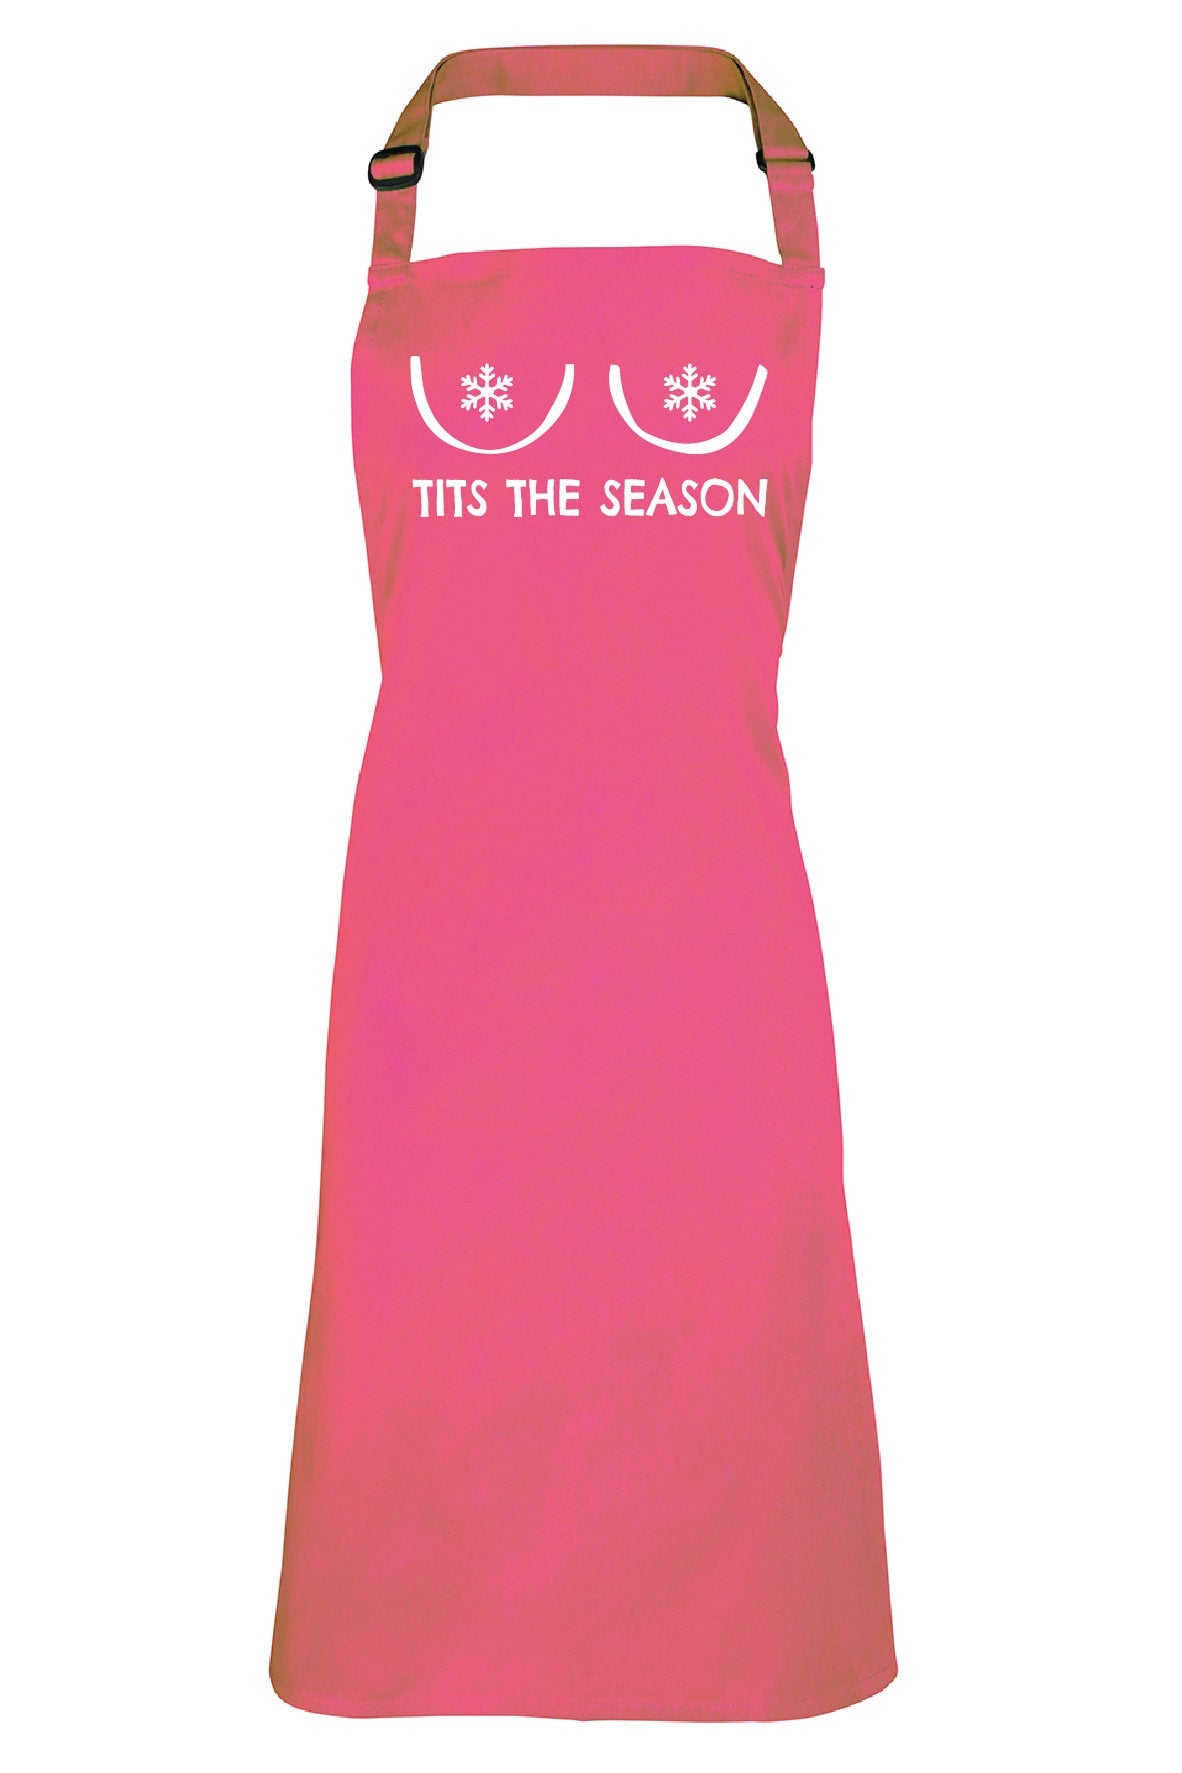 Tits the Season B Apron PR150 | Funny Rude Christmas Apron | Xmas Dinner | Kitchen | Boobs